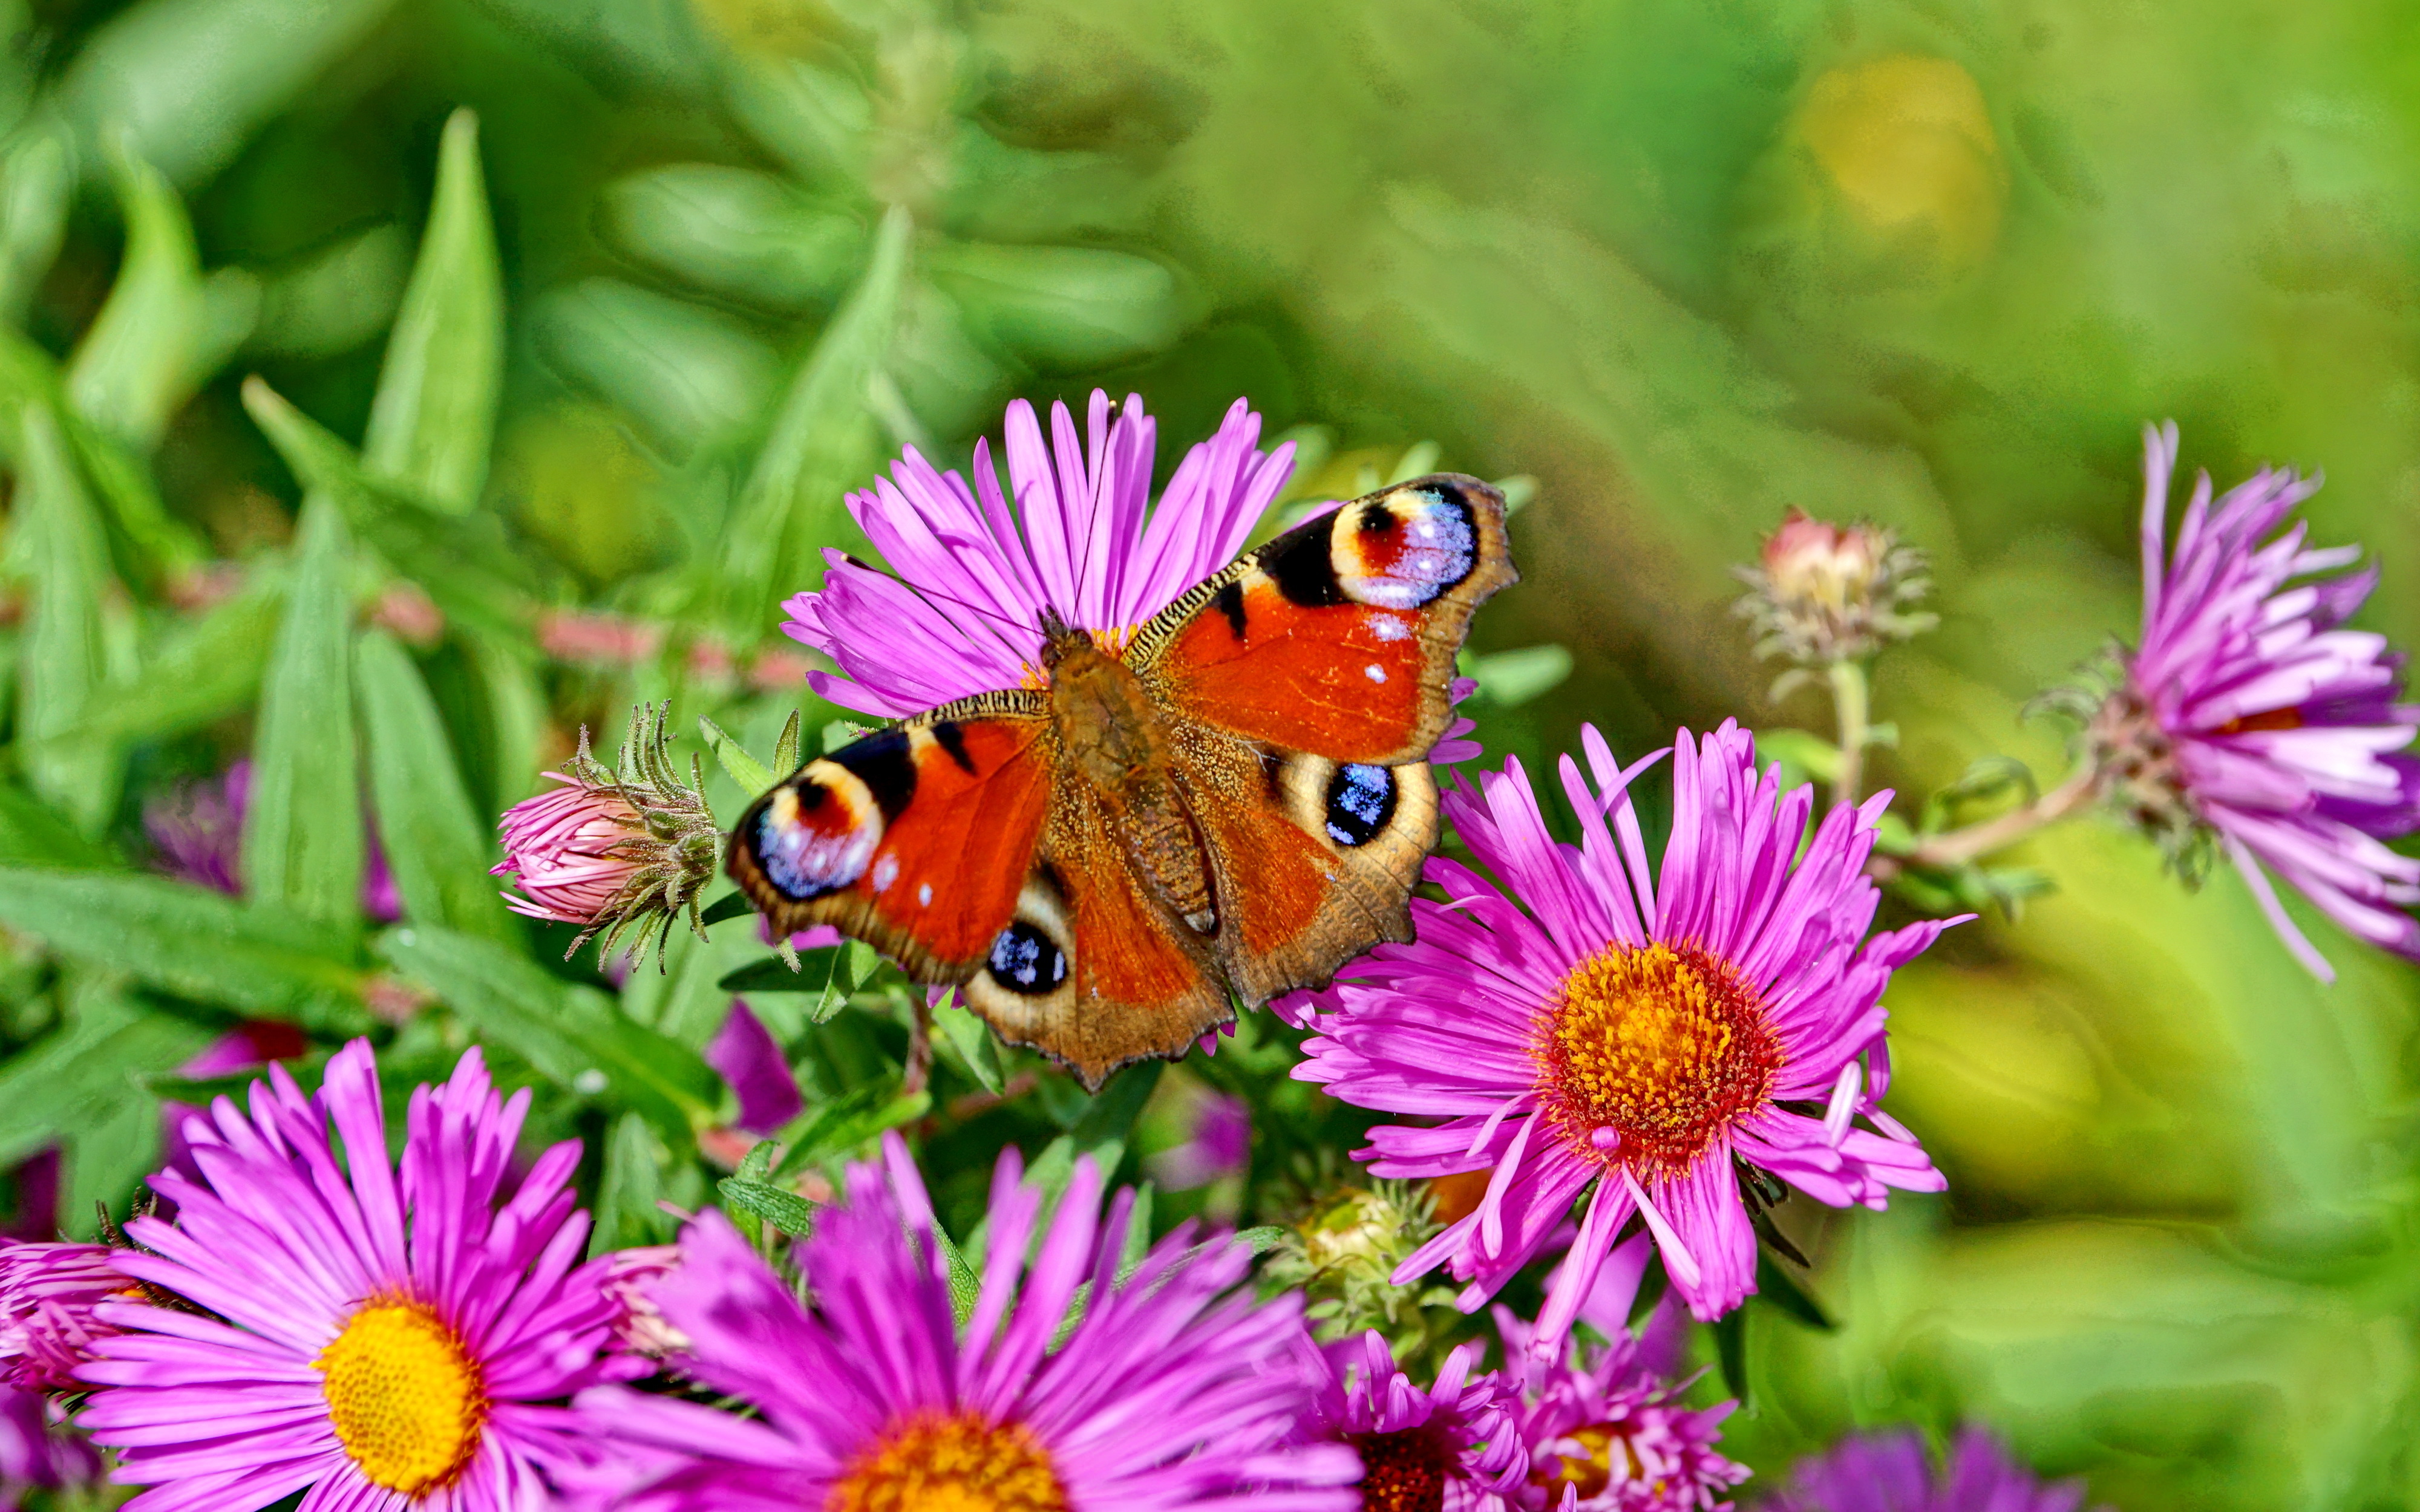 Про лета бабочка. Летние цветы. Бабочка на цветке. Лето бабочки. Луг с цветами и бабочками.